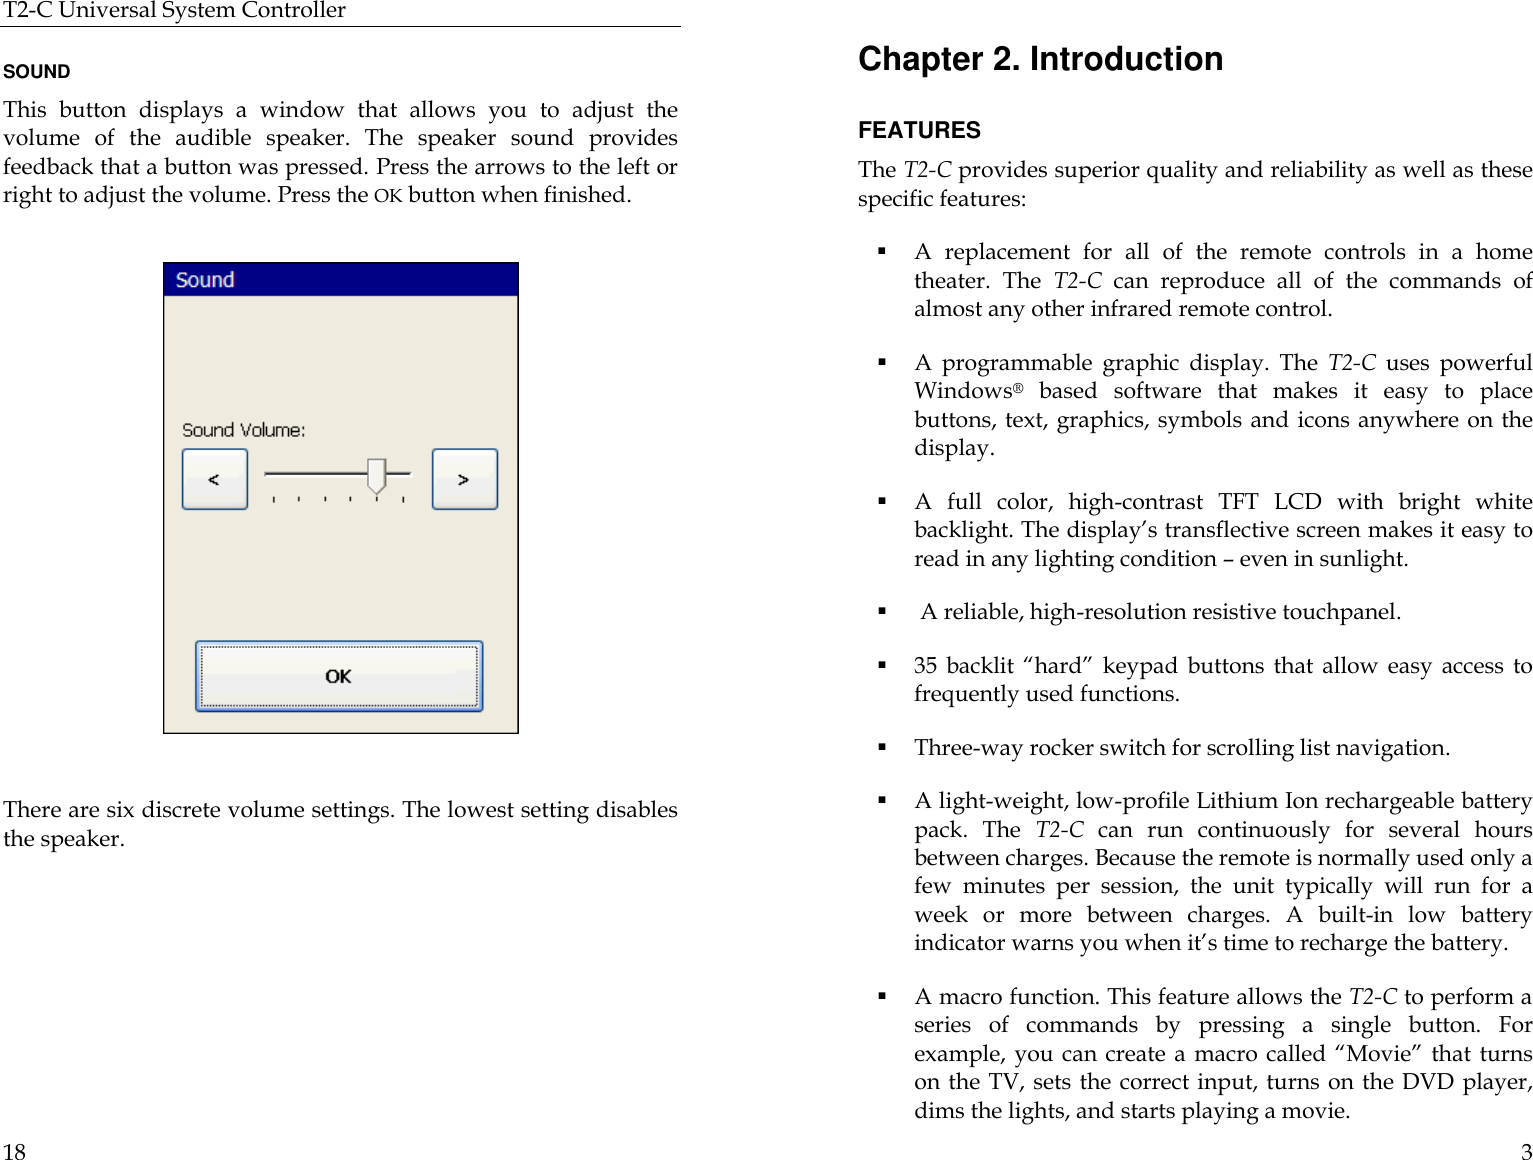 ps4 universal remote manual pdf